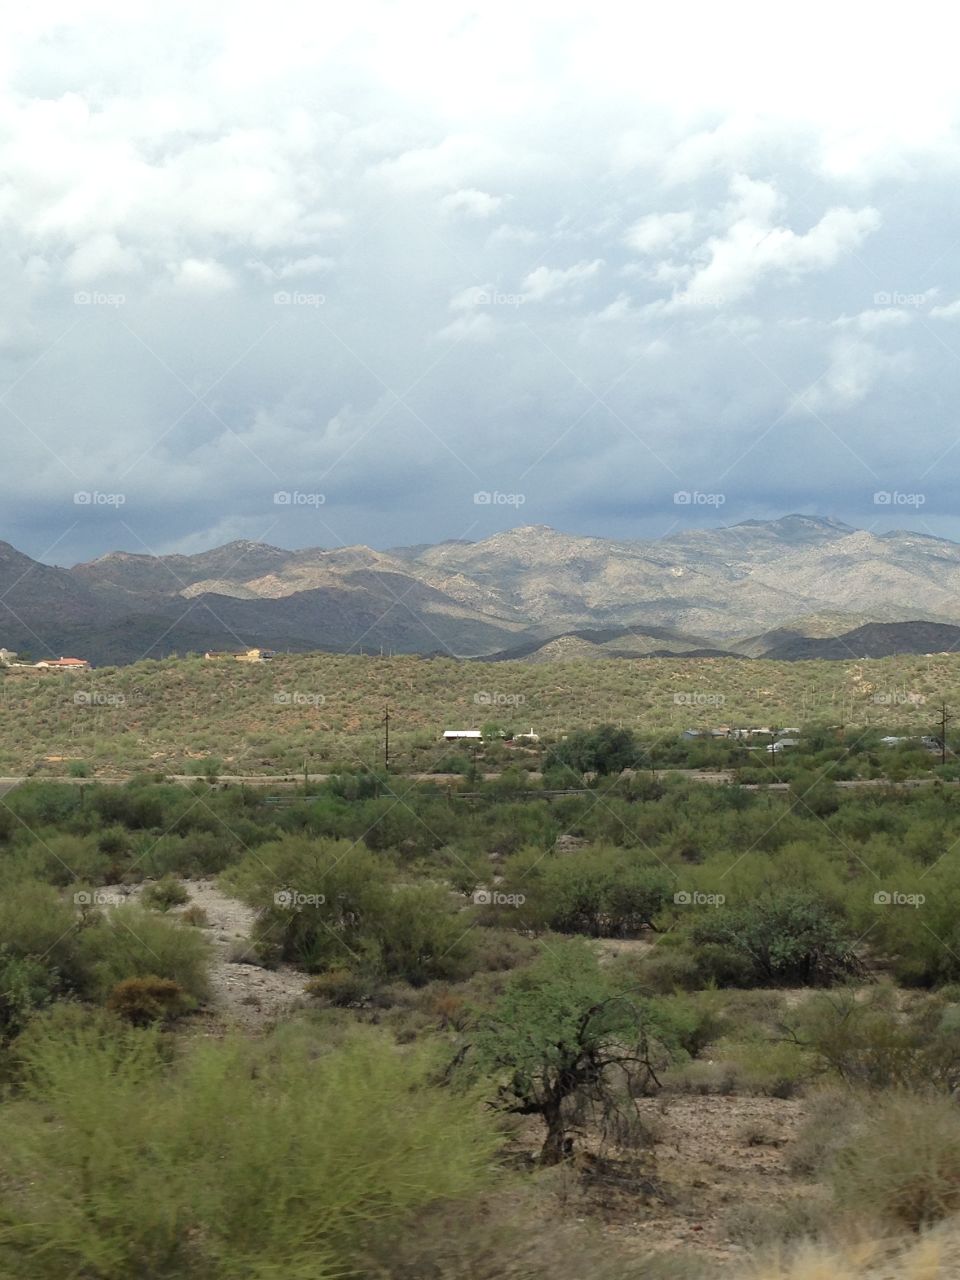 The view near Black Canyon City in Arizona